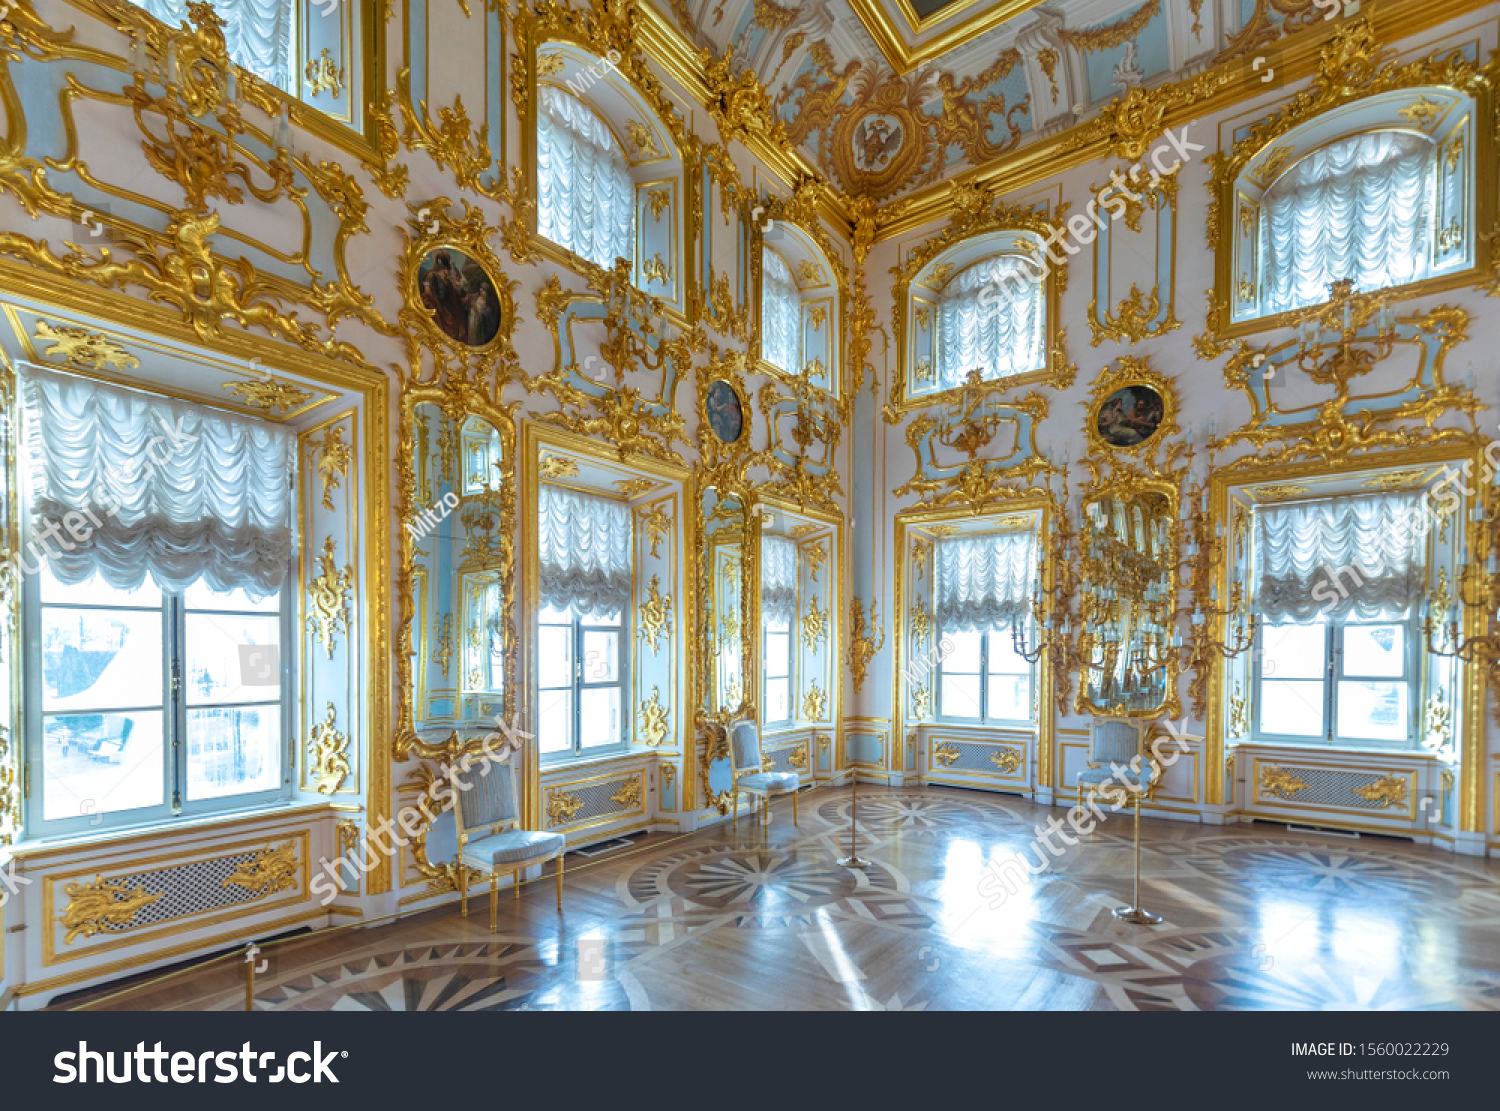 procedure Blaze Chap Peterhof Palace Interior Saint Petersburg Russia Stock Photo 1560022229 |  Shutterstock